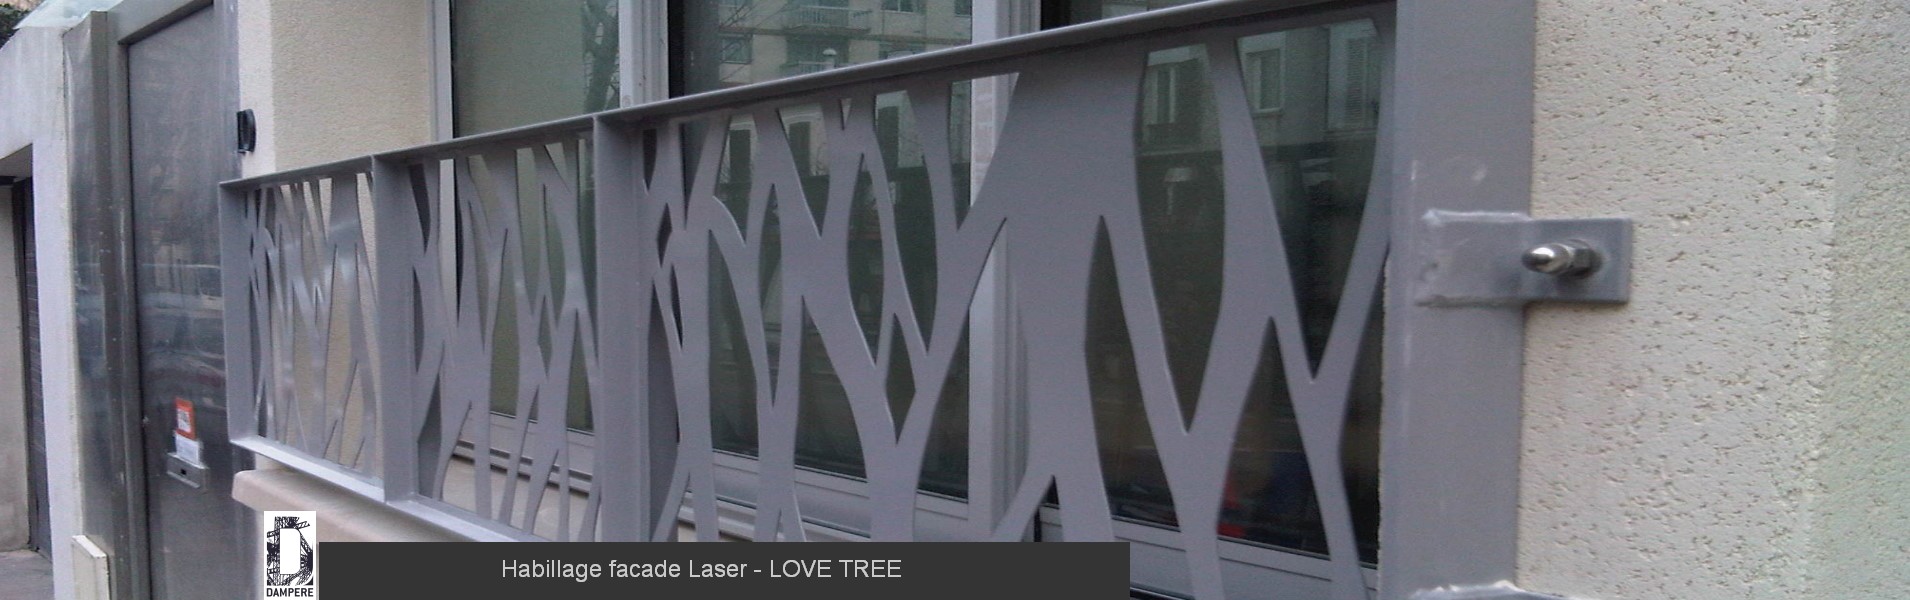 Habillage facade Laser LOVE TREE 9